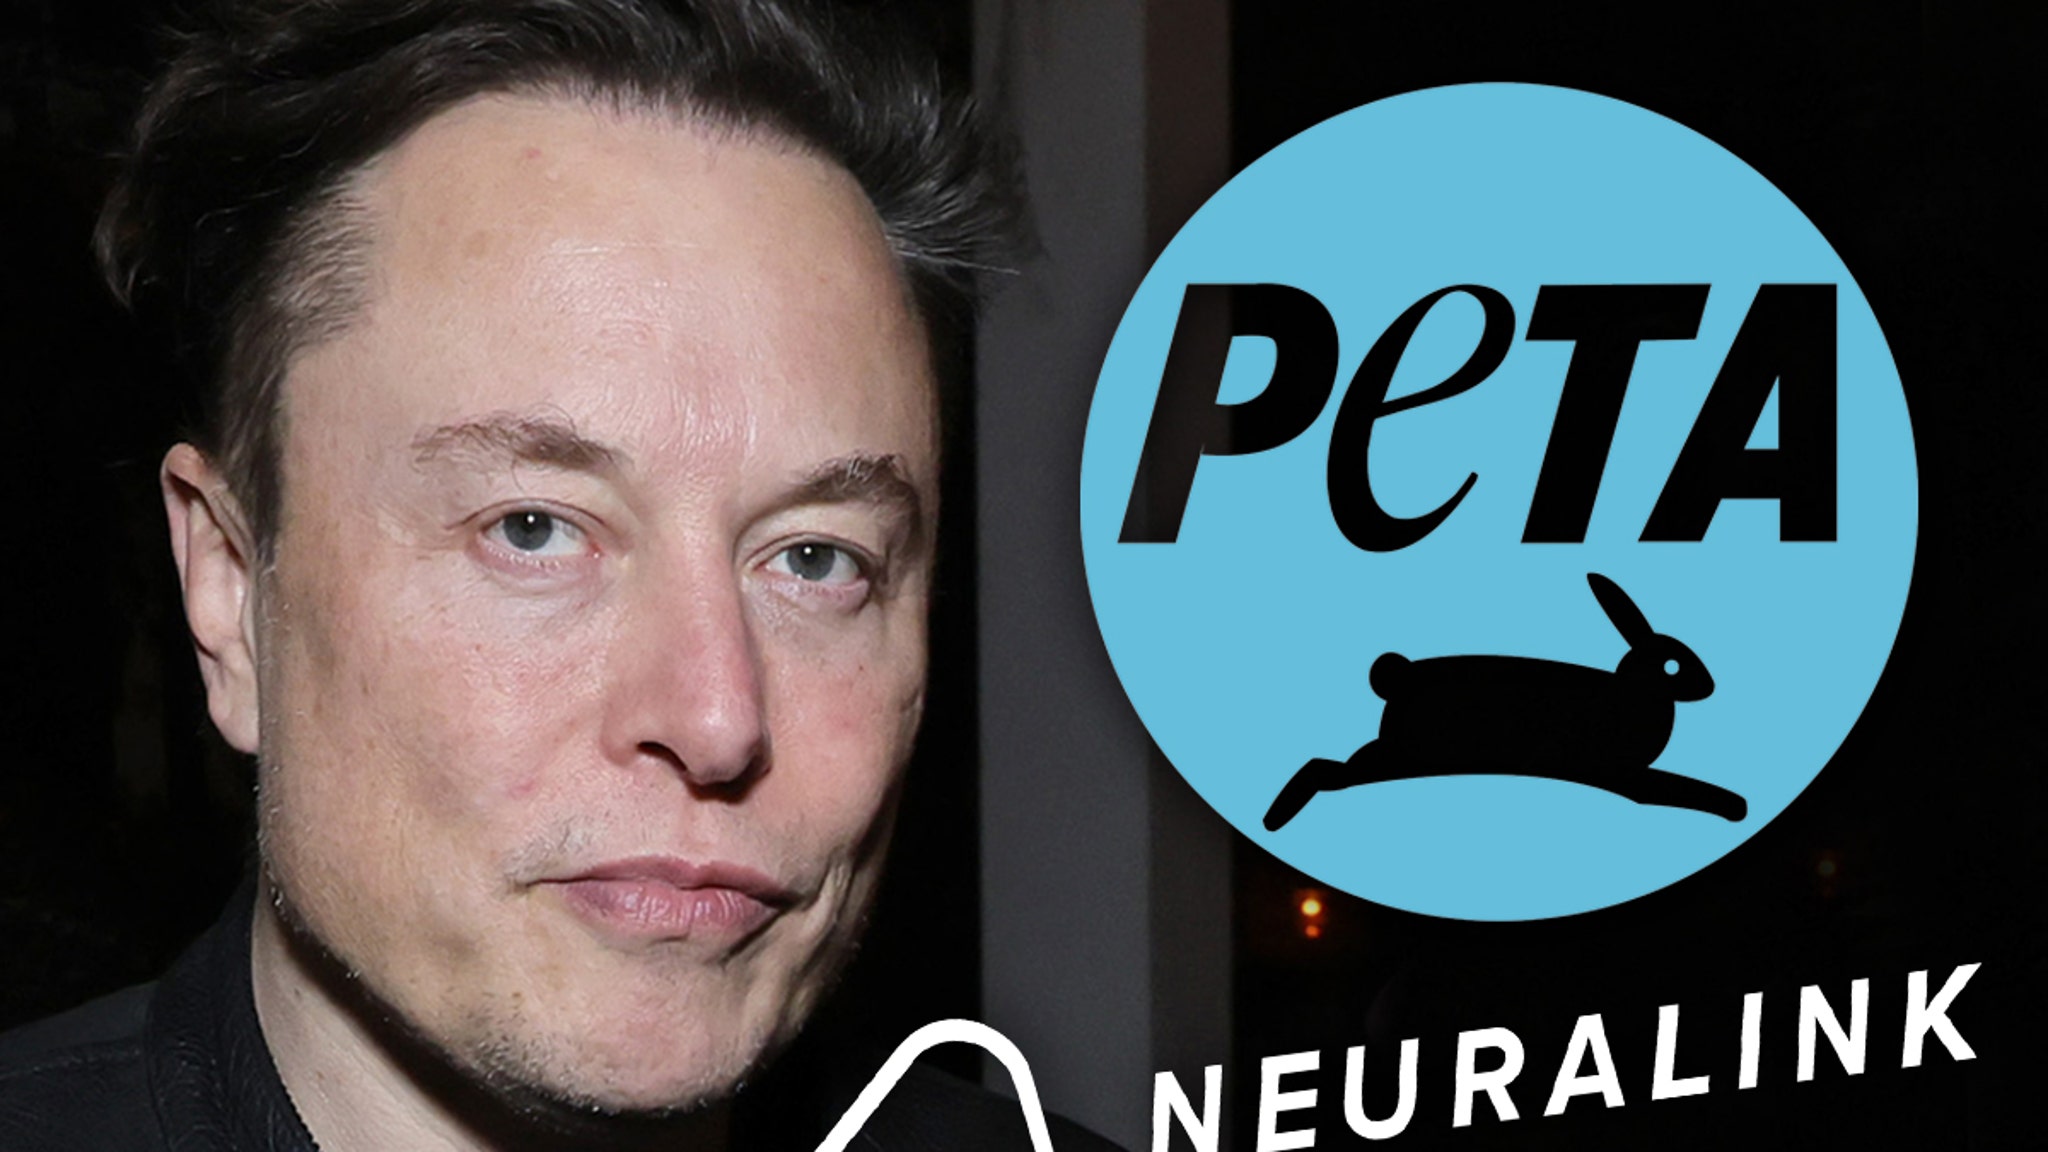 PETA Wants Elon Musk’s Neuralink Animal Lab Closed, Applying Twitter Pressure